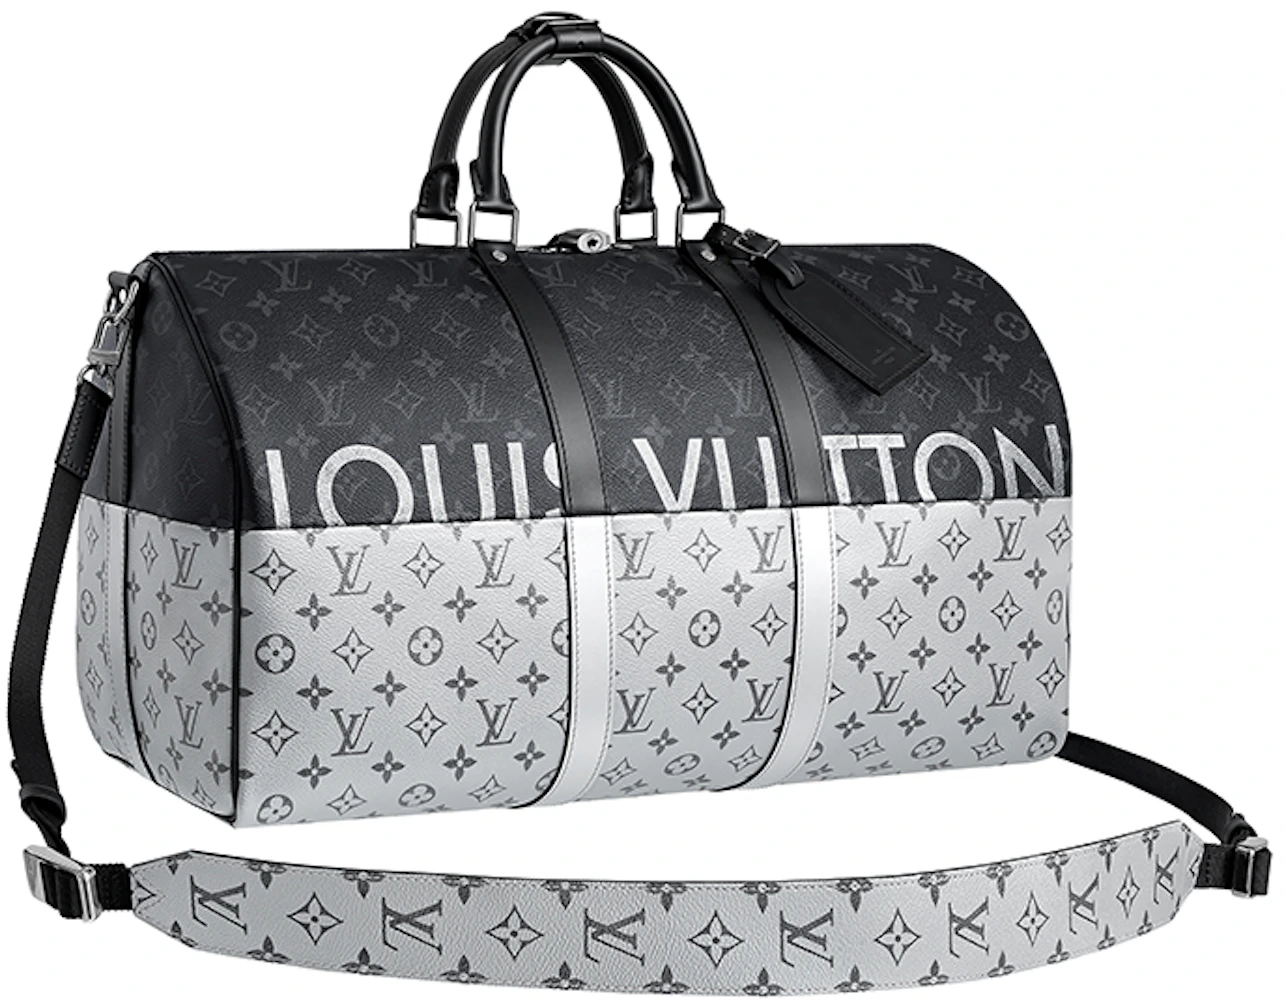 Louis Vuitton Monogram Gradient Hoodie Noir Blanc in Black for Men